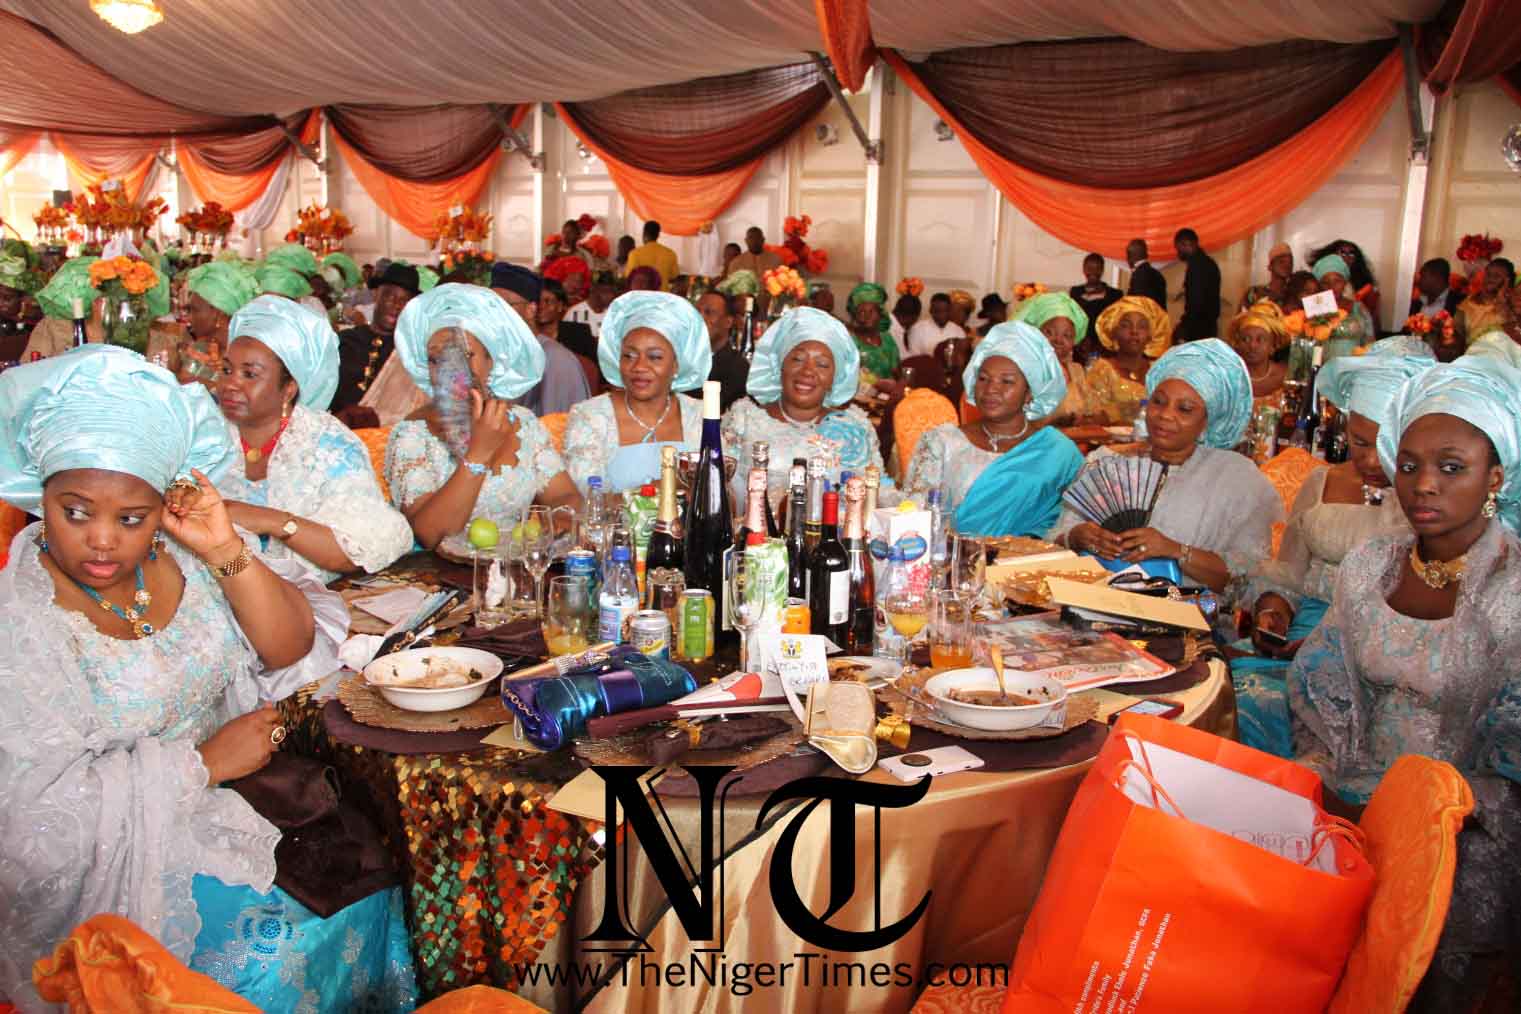 The-niger-times-godswill-faith-wedding-Traditional-Bayelsa-goddluck-25.jpg